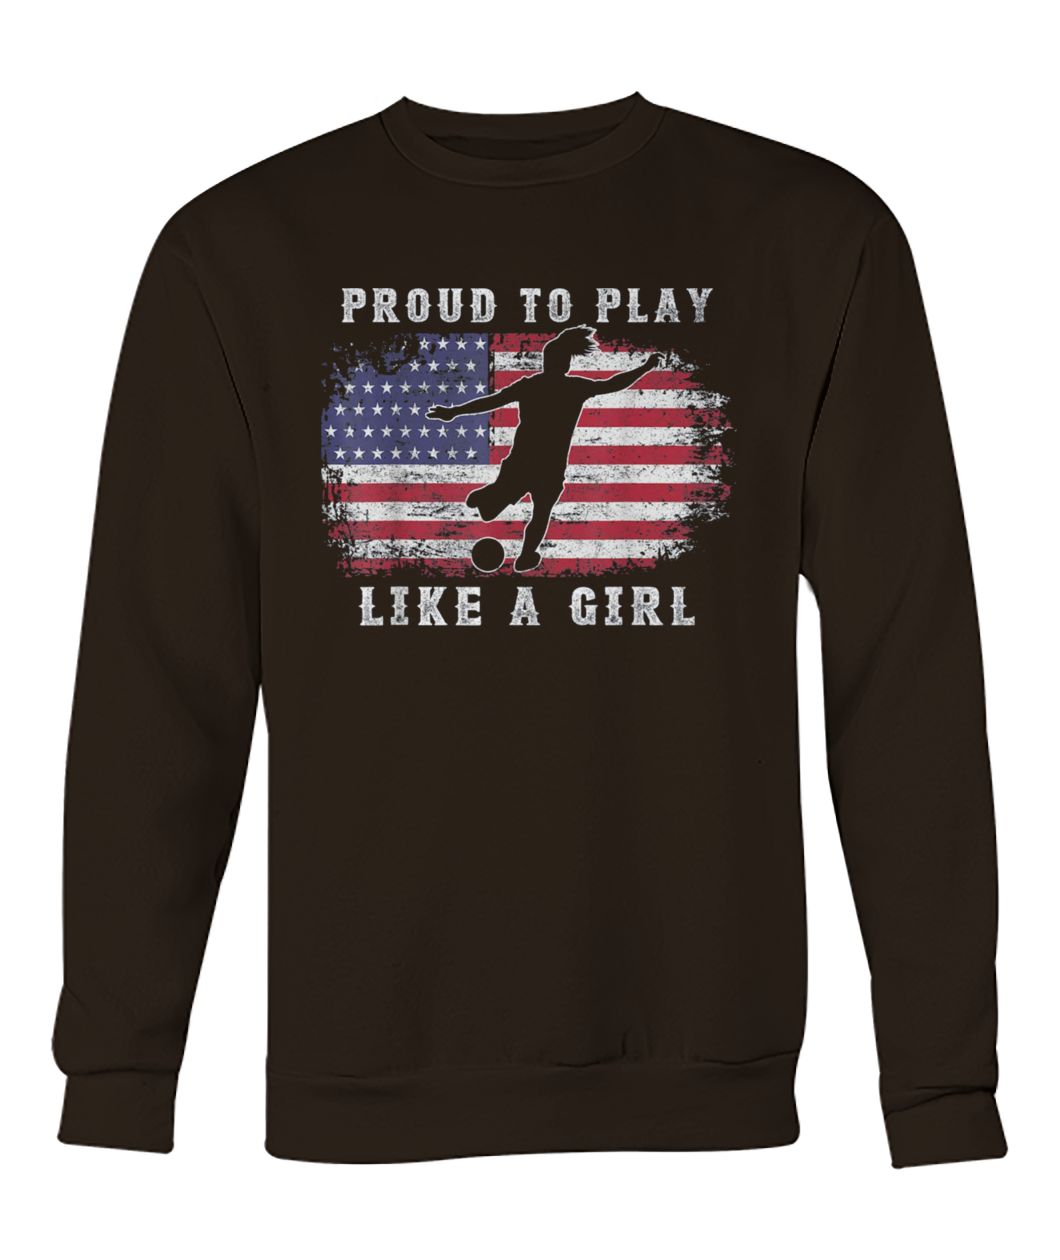 USA women soccer american flag proud to play like a girl crew neck sweatshirt